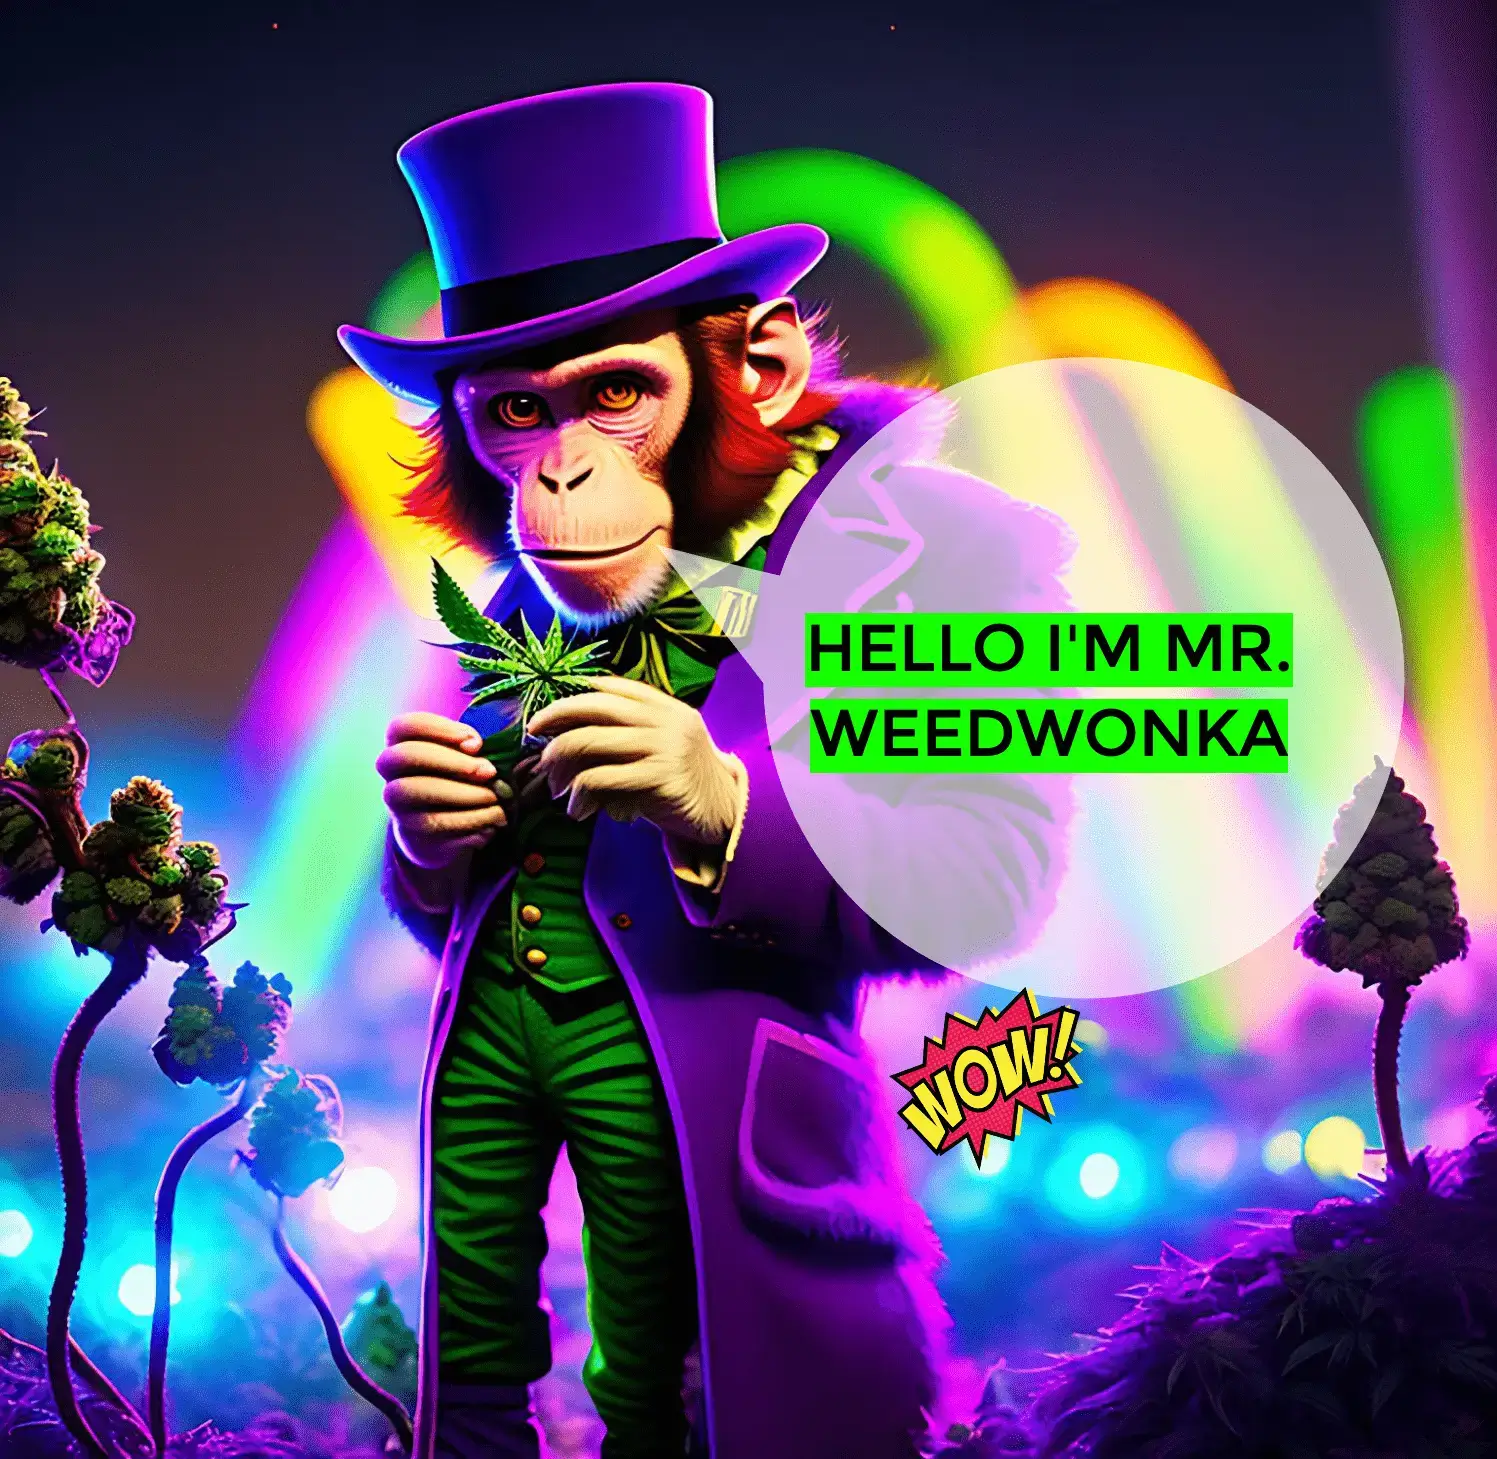 Mr. weedwonka fabbrica cannabis light alta qualità